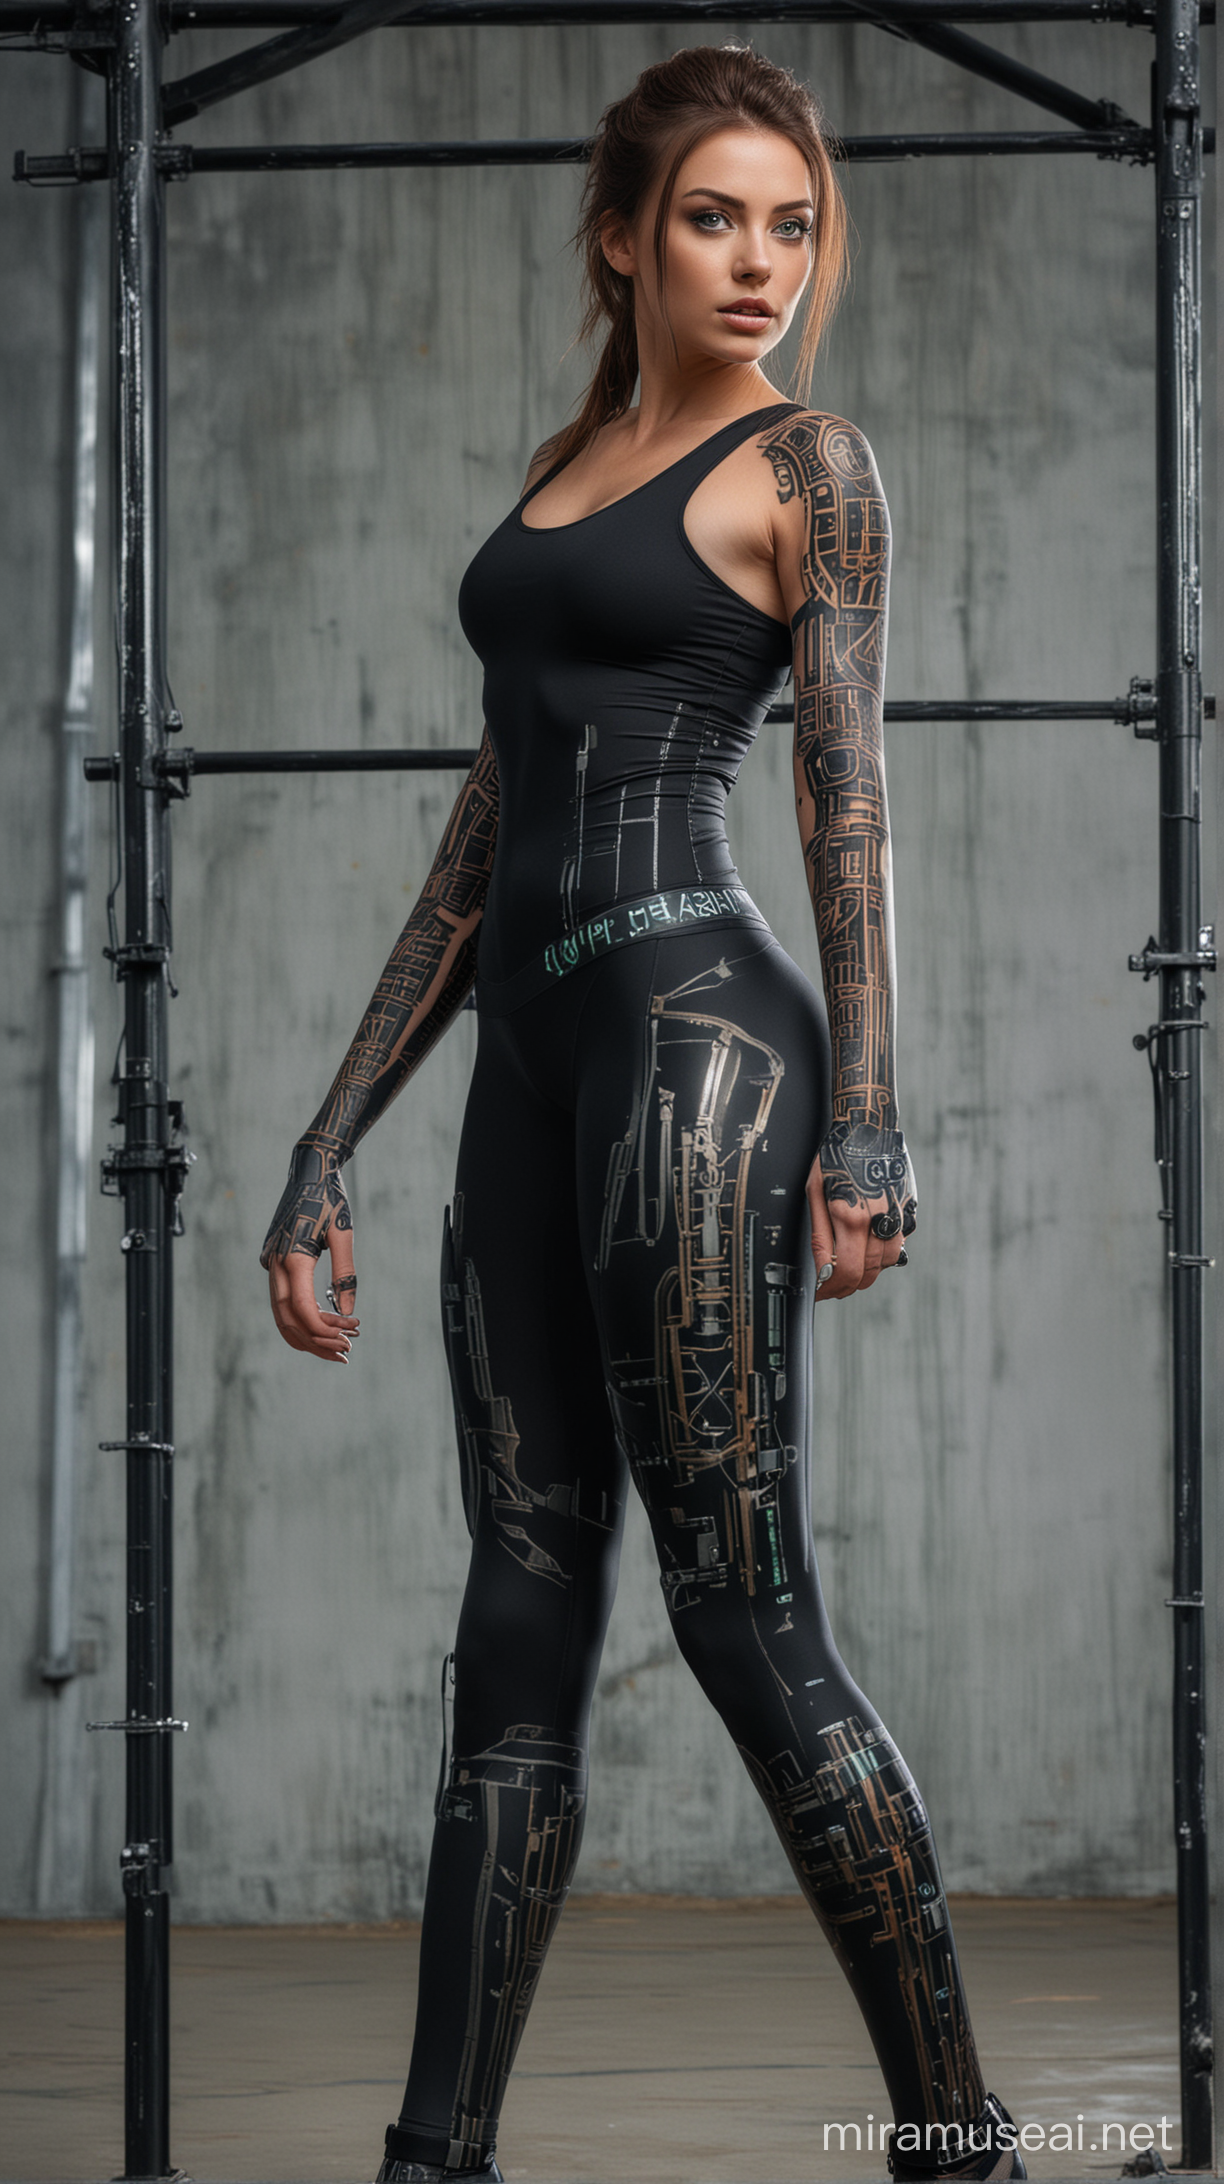 Cyborg Woman with Striking Green Eyes in Dystopian Setting